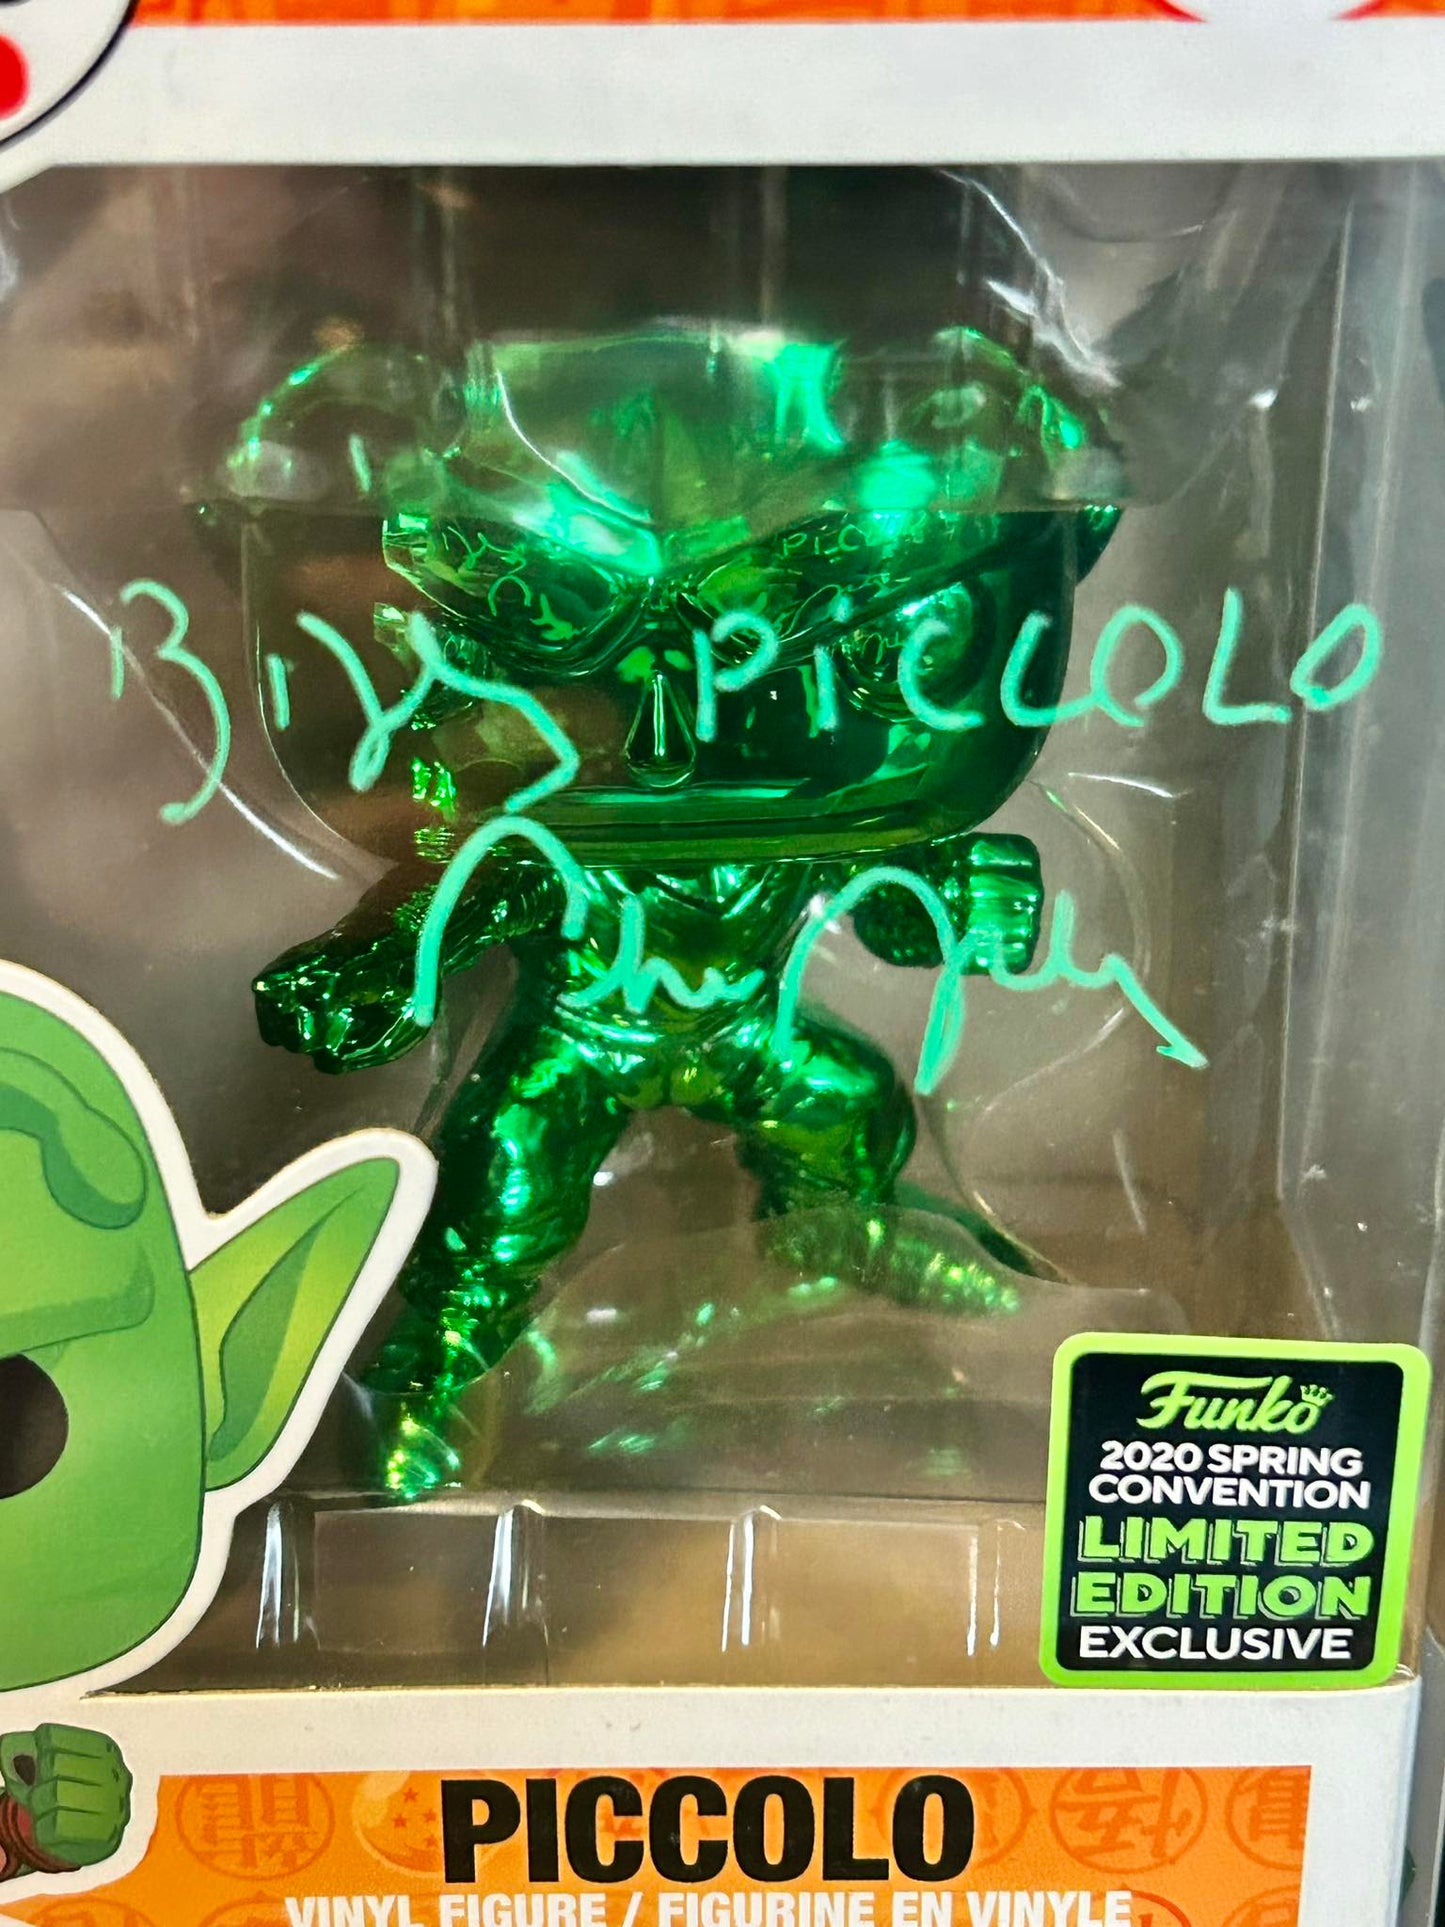 Figurine Pop Dragon Ball Z #760 Piccolo - Chrome Green dédicacée par Philippe Ariotti